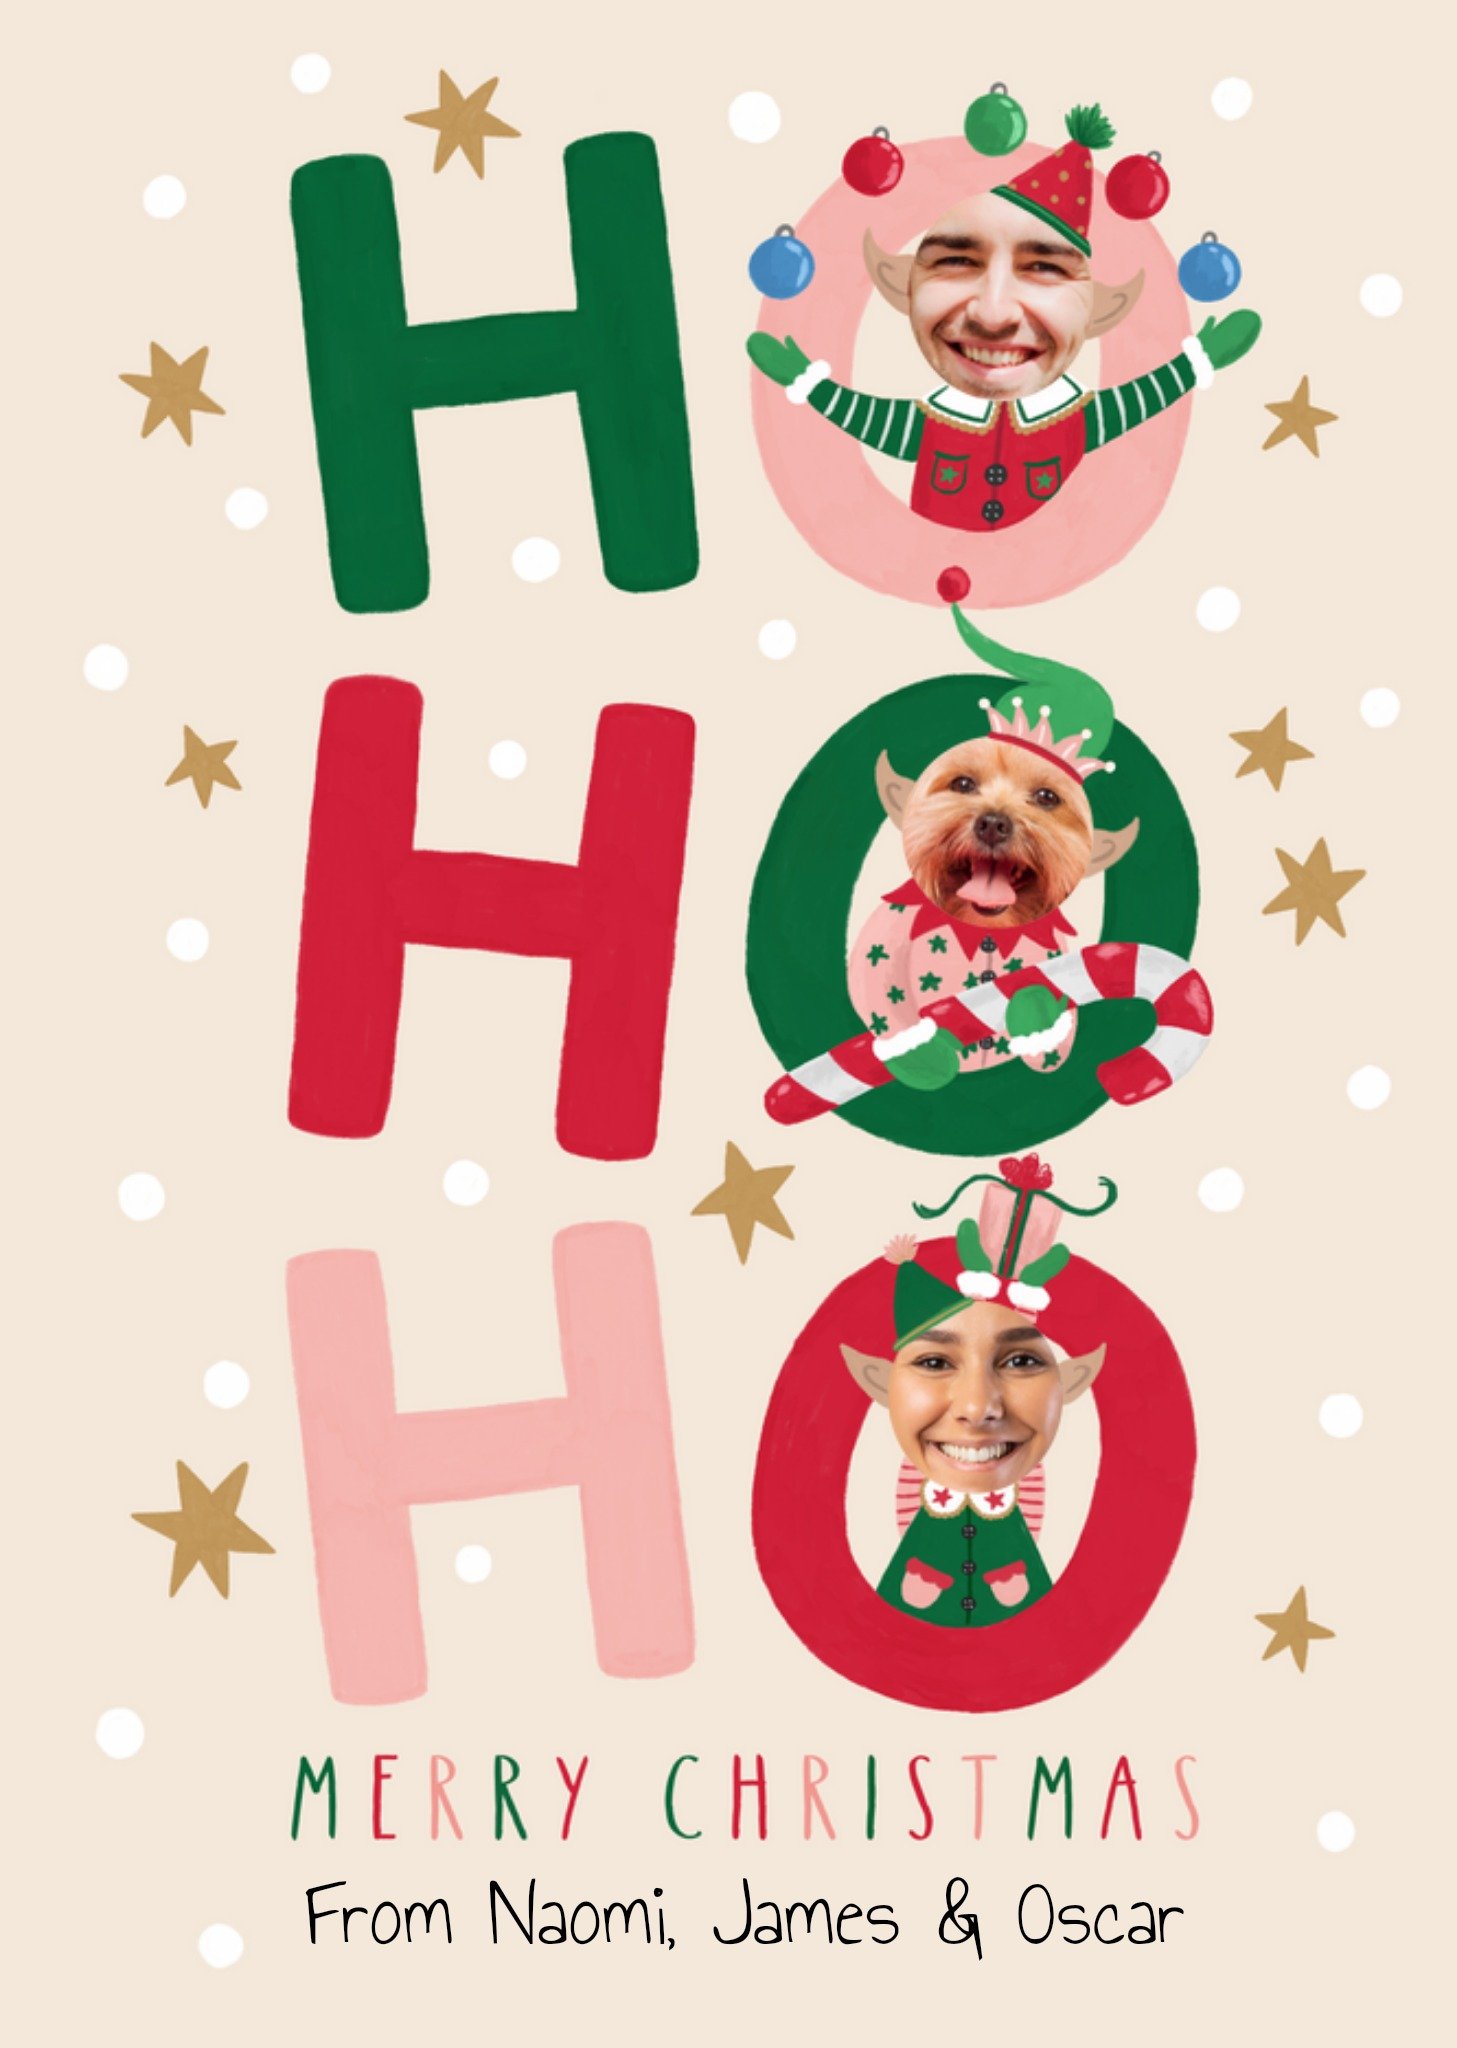 Moonpig Ho Ho Ho Typography Bauble And Candy Cane Photo Upload Christmas Card Ecard